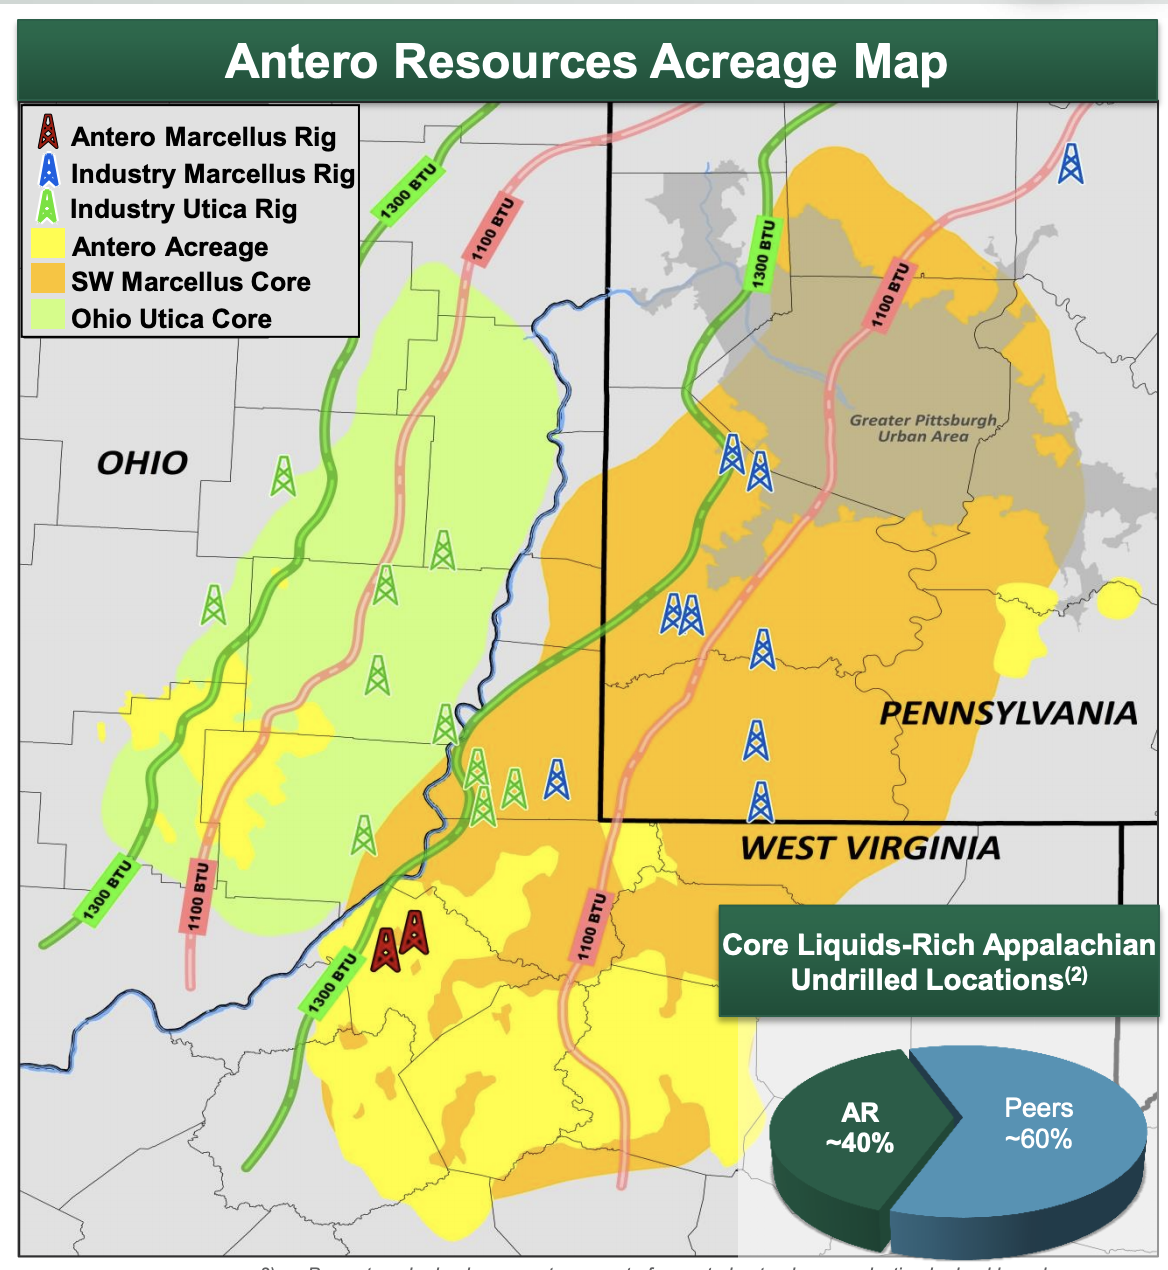 Antero Resources Acreage Map (Source: June 2020 Investor Presentation)